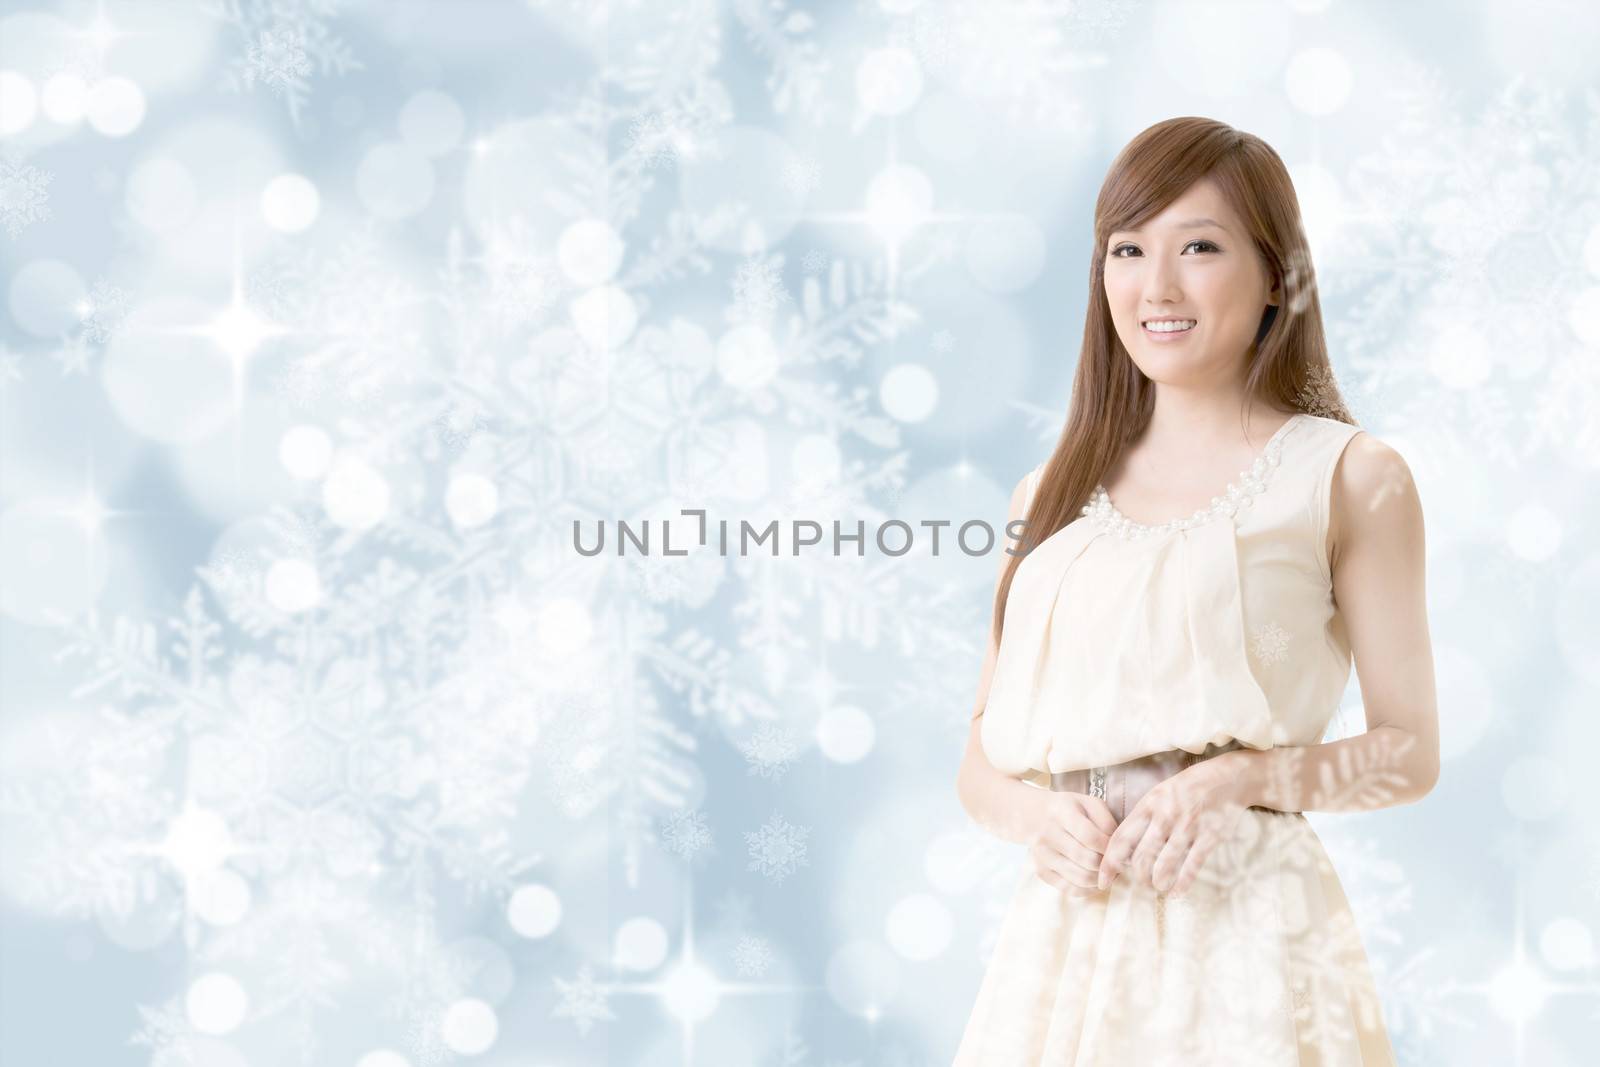 Asian beauty, closeup portrait on Christmas shiny background.